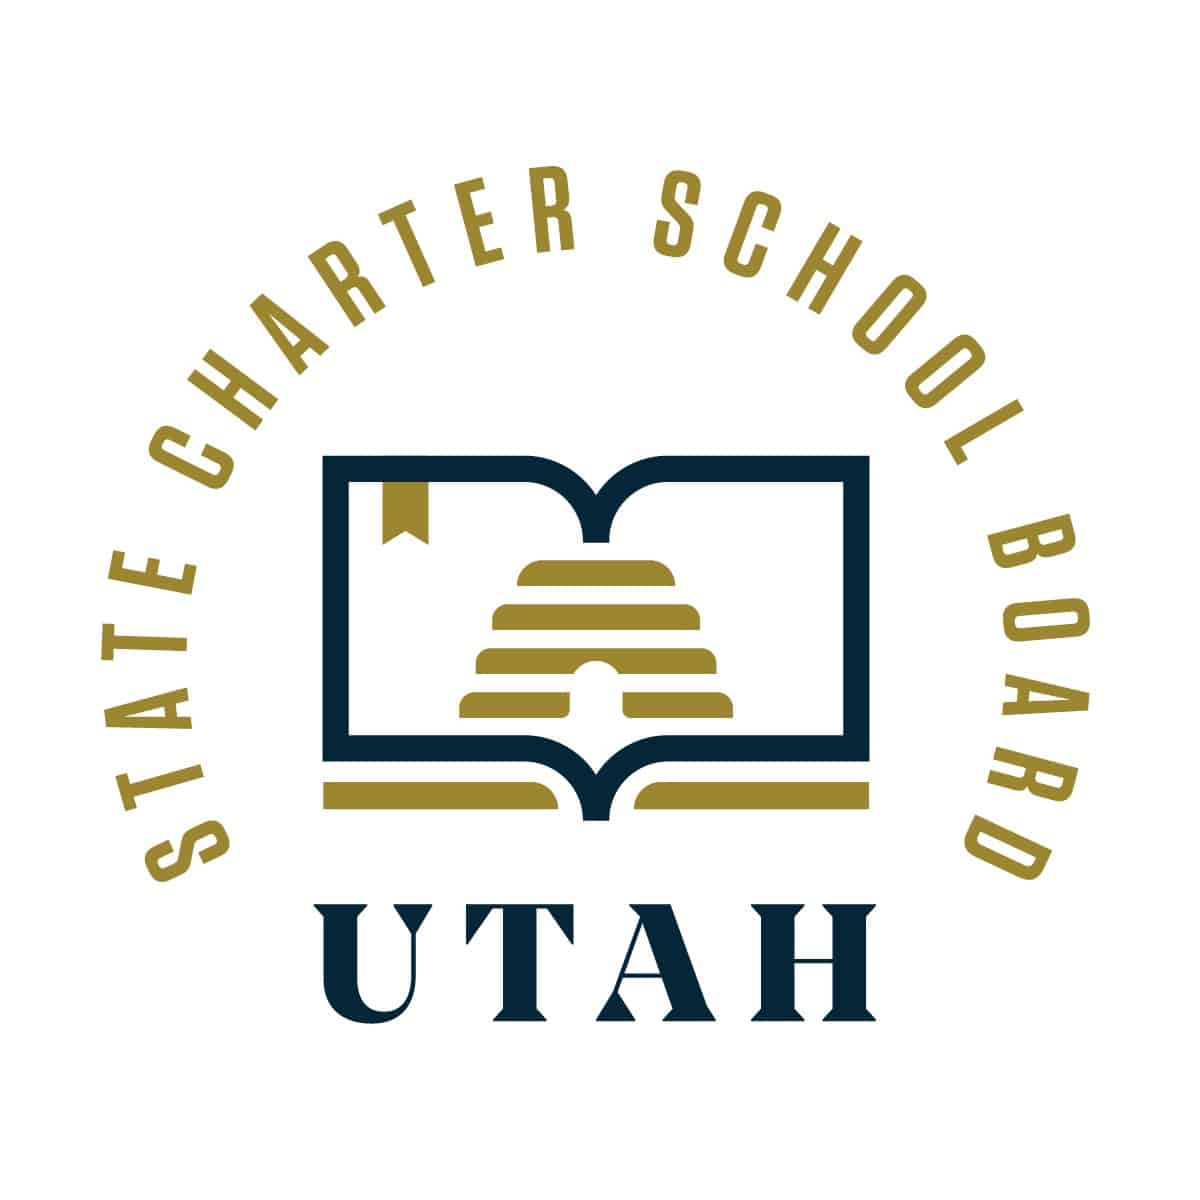 Utah State Charter School Board